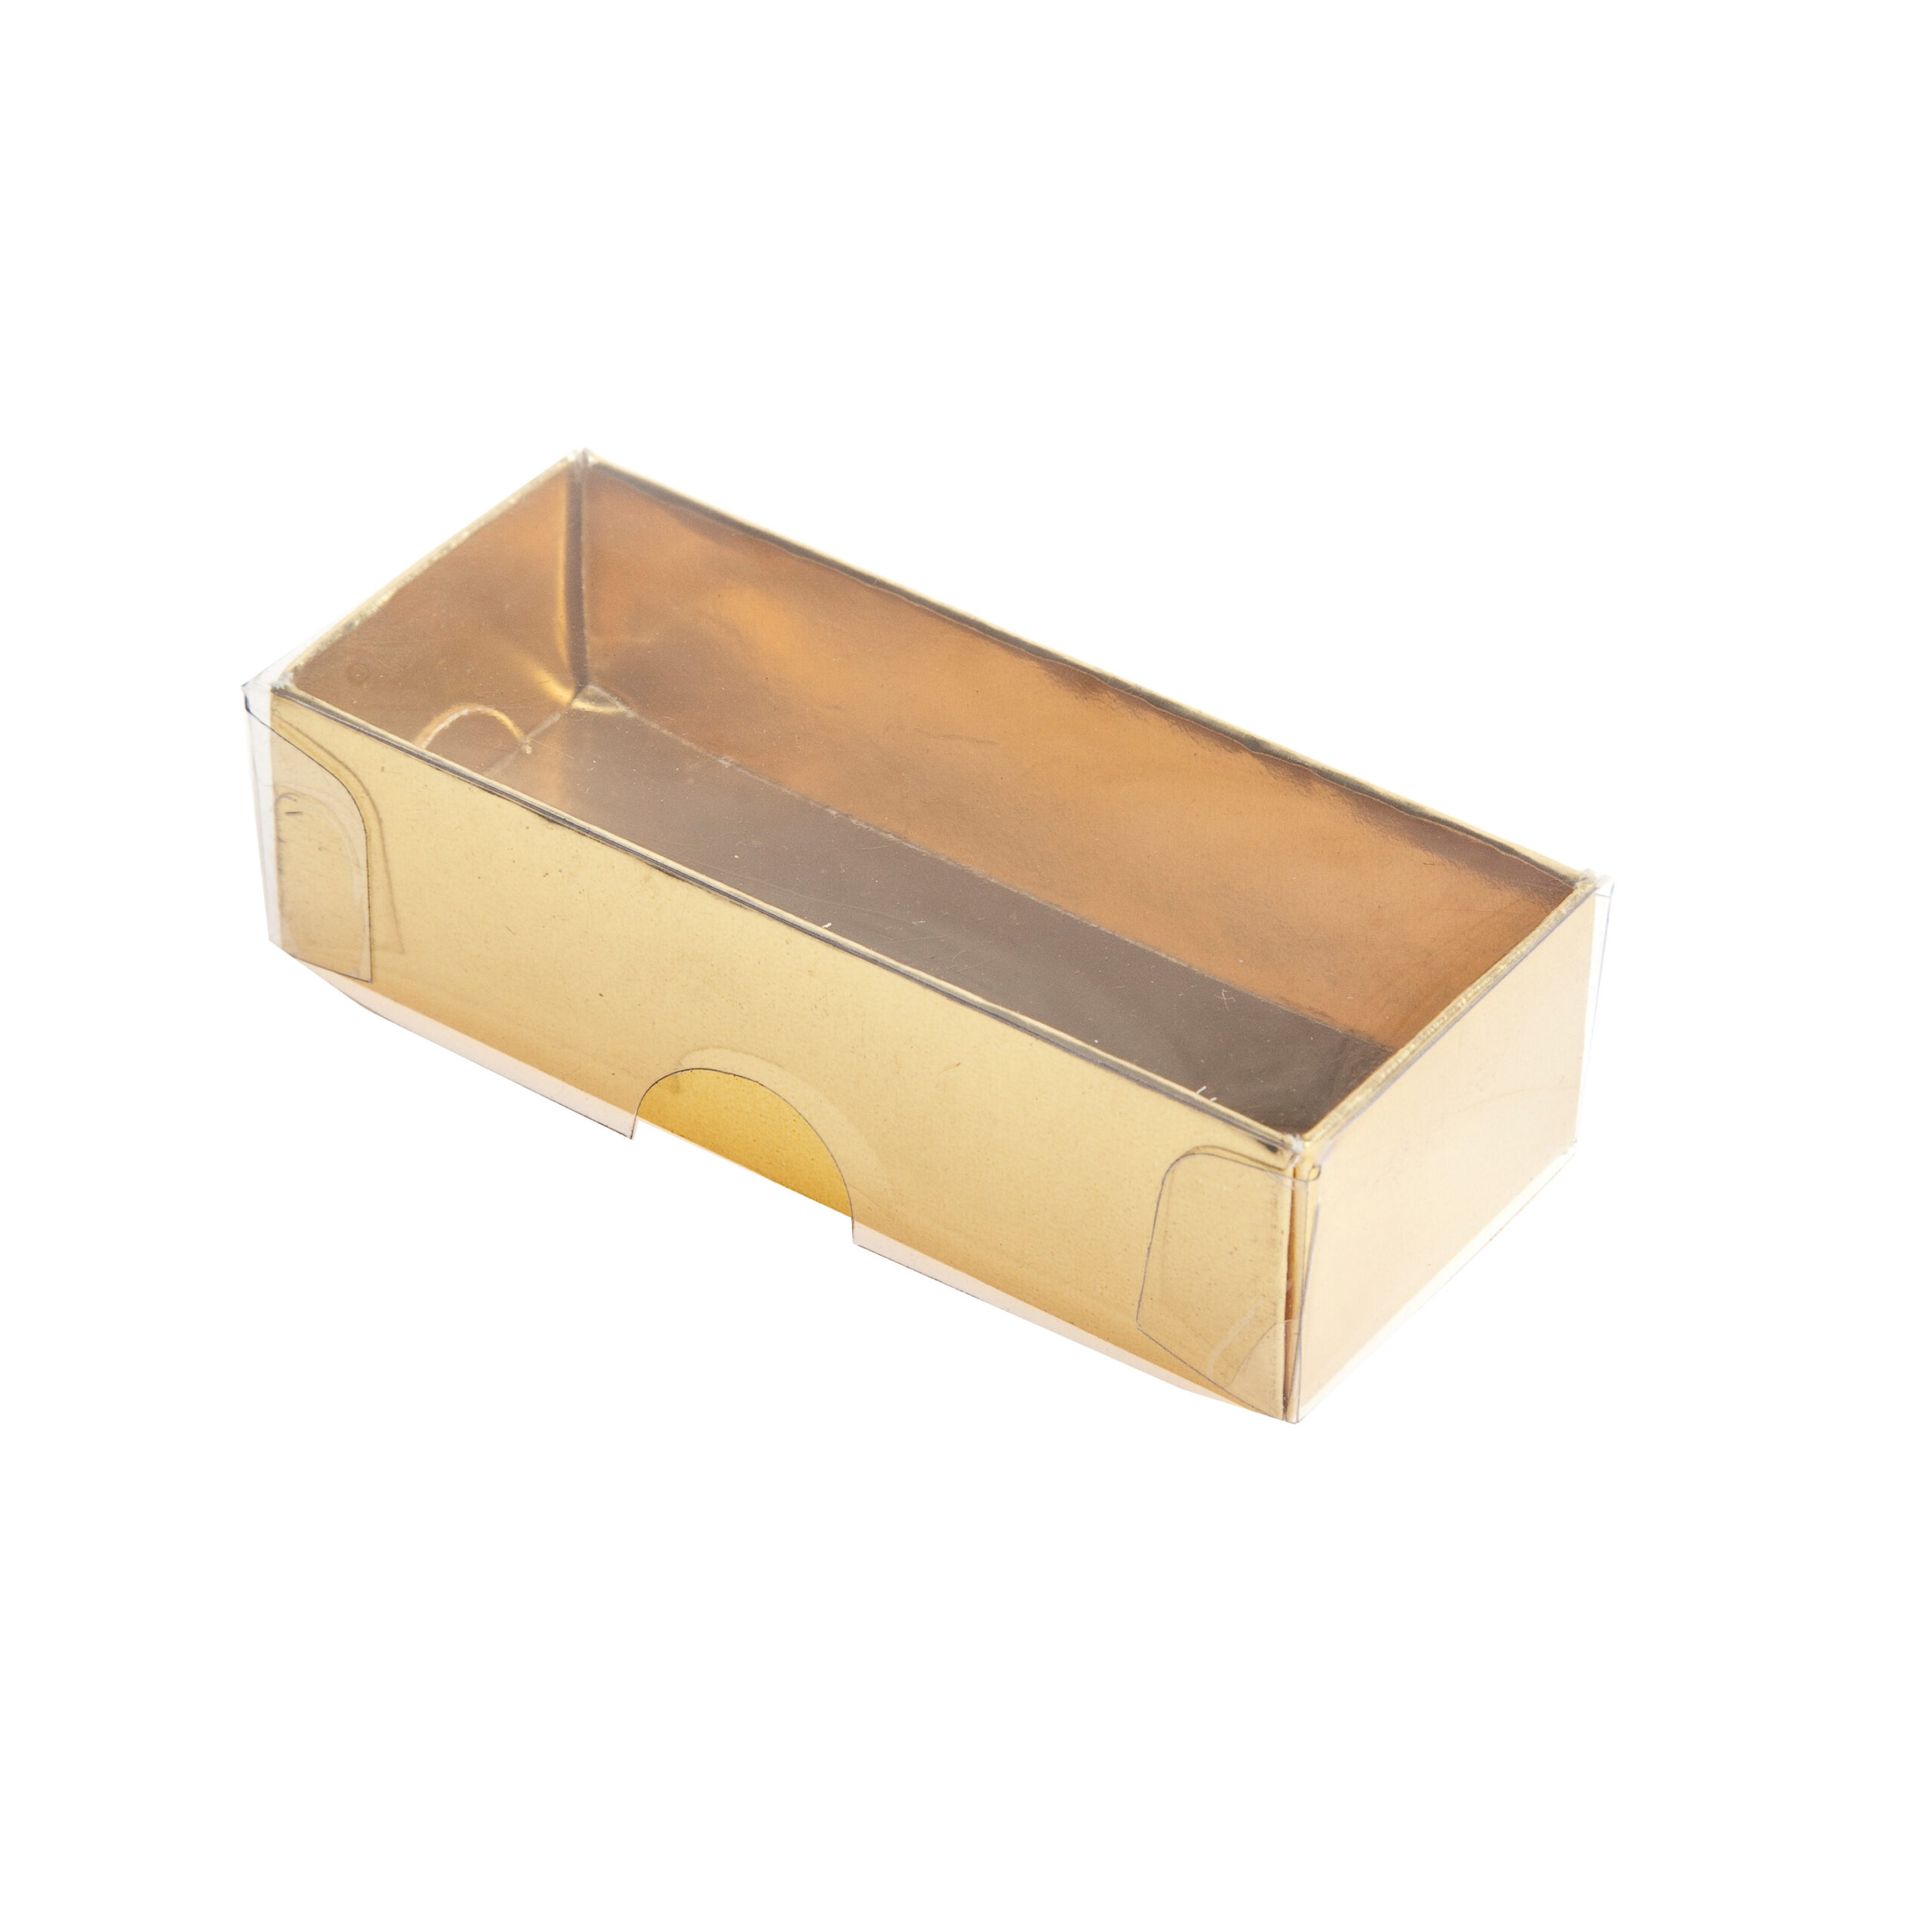 PVC BOX GOLD
BASE 3 TRUFFLE
37x91x26mm